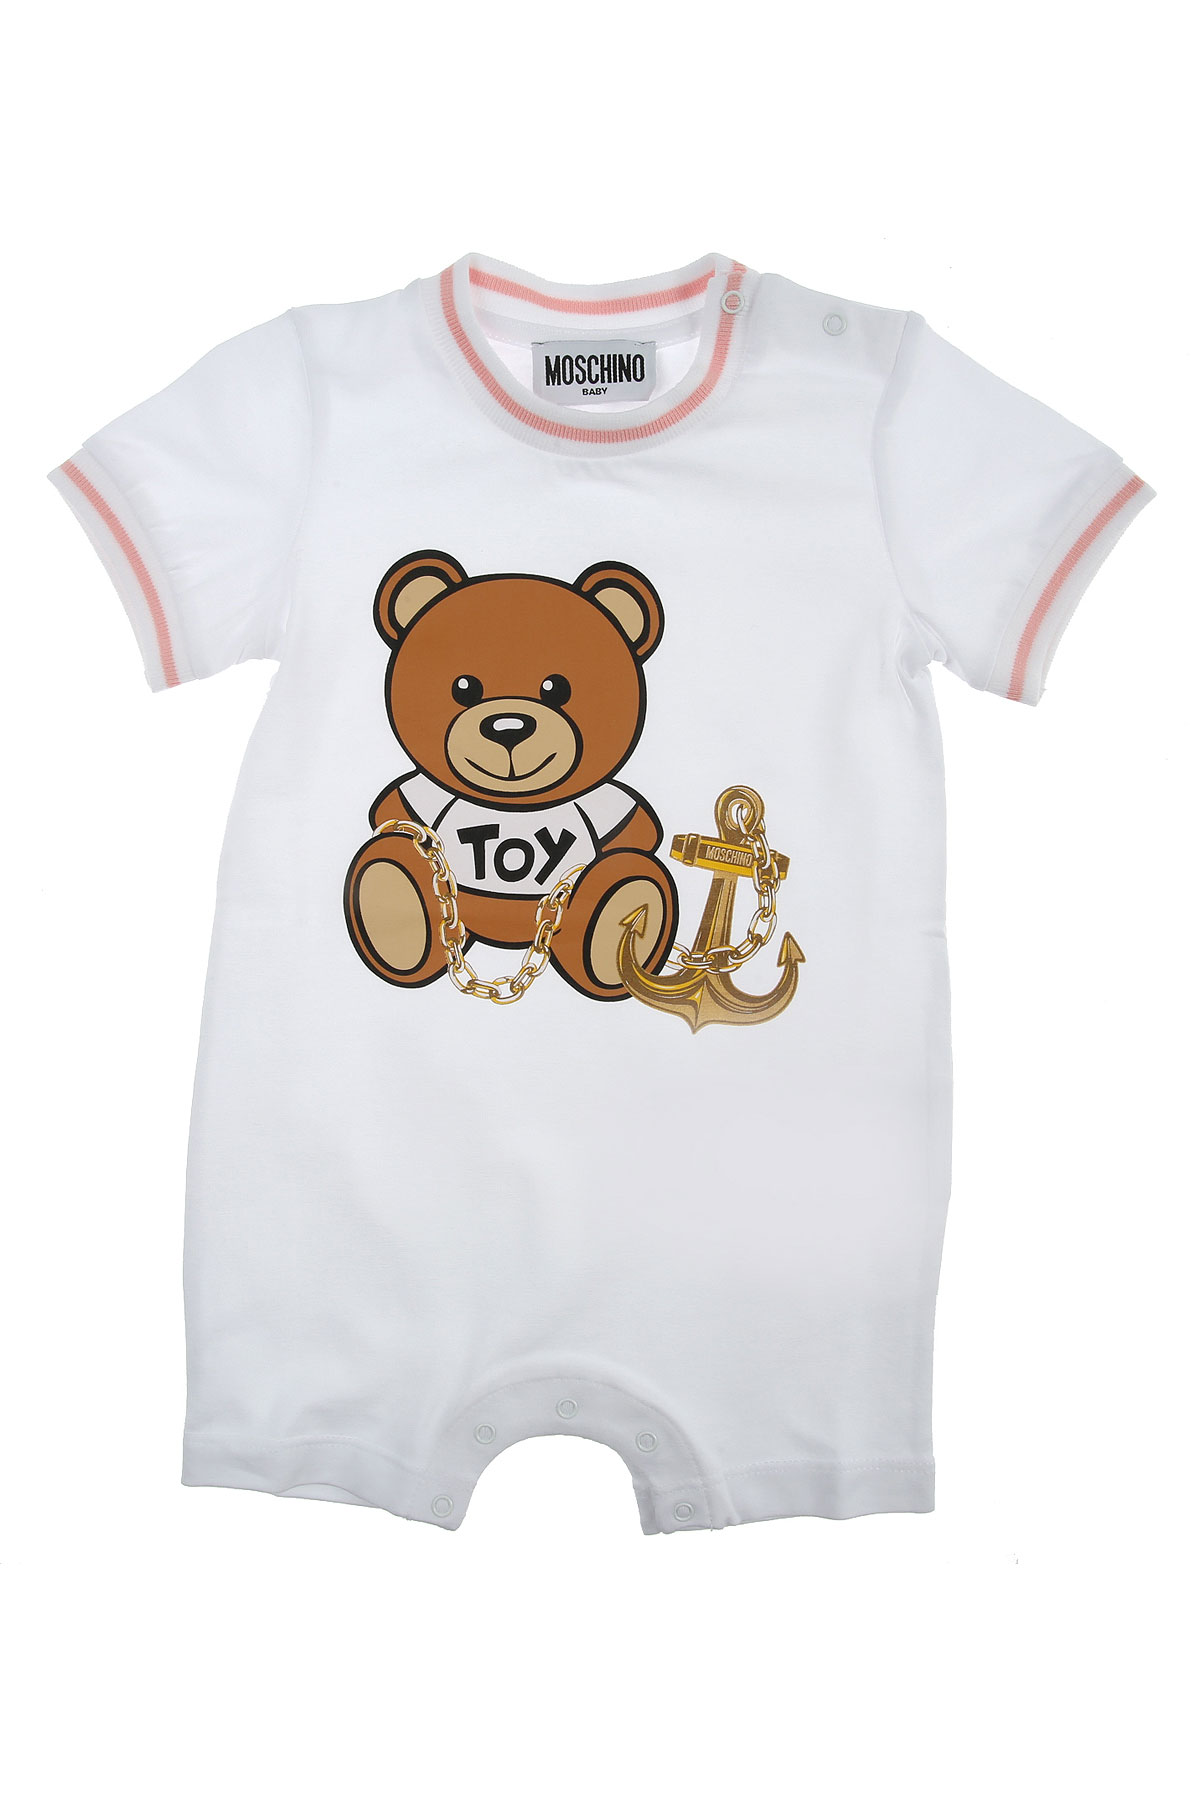 Baby Girl Clothing Moschino, Style code: mdt014-lba00-10101